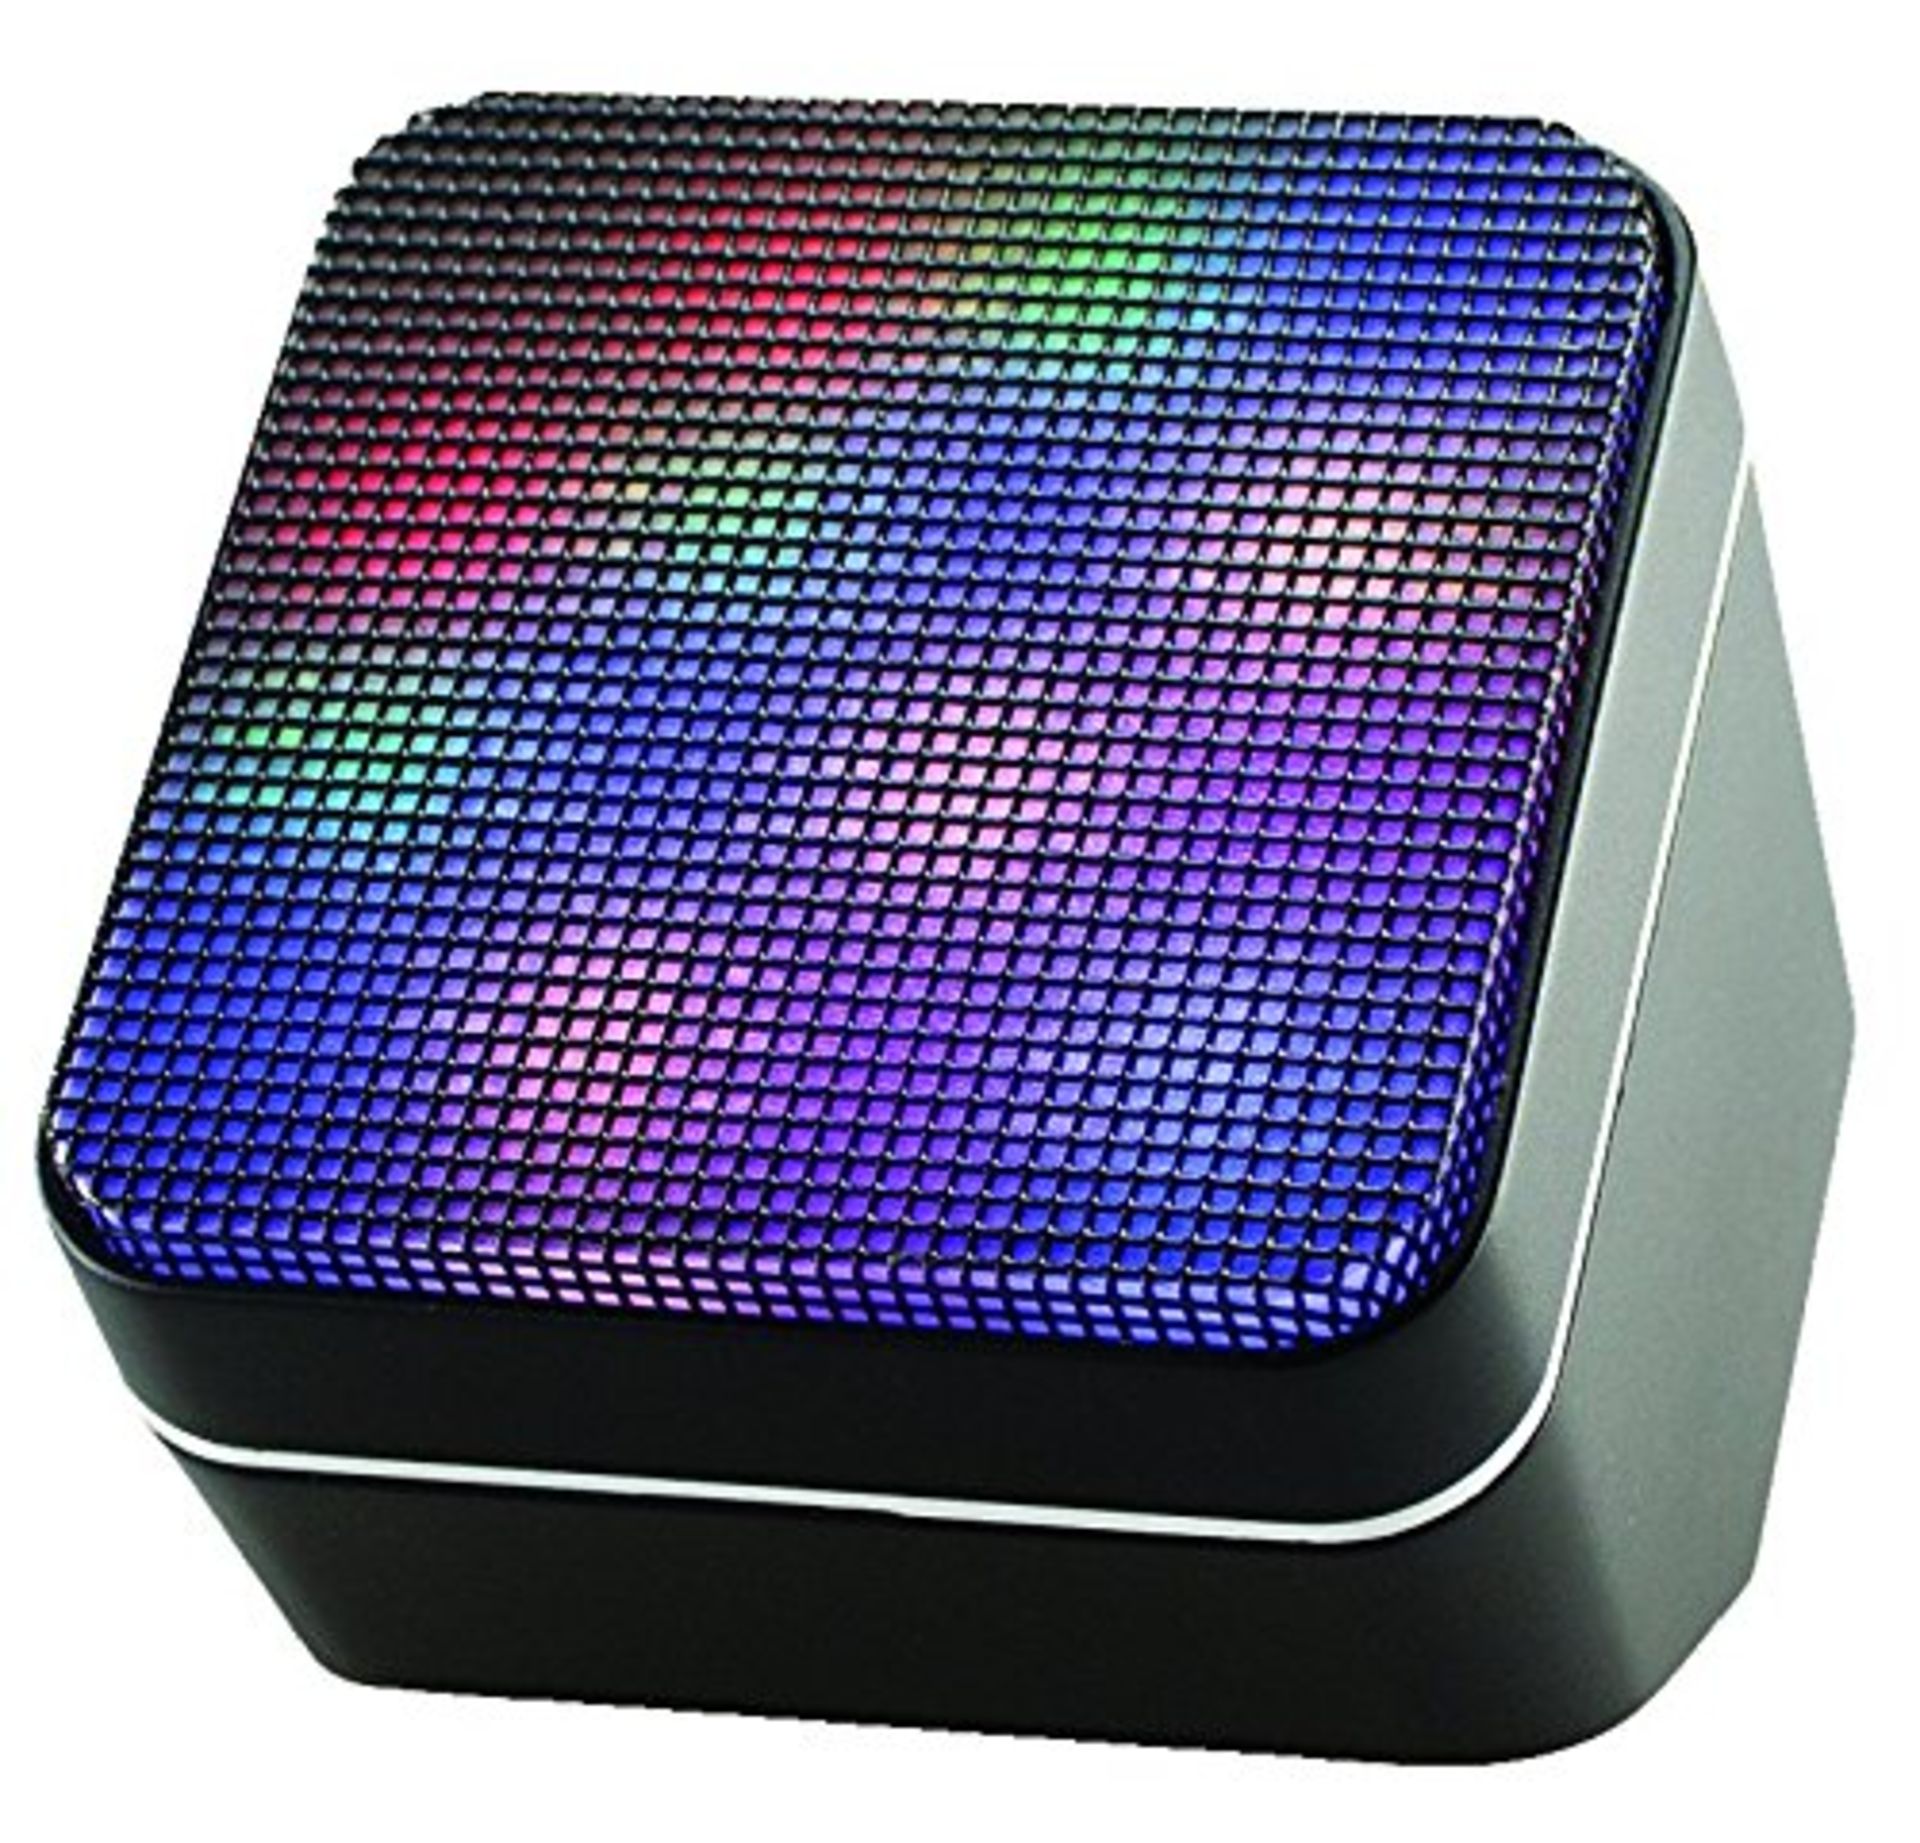 V Brand New LED Bluetooth Wireless Speaker - High Quality Sound - 3.5mm AUX Input - 6 Colour LED